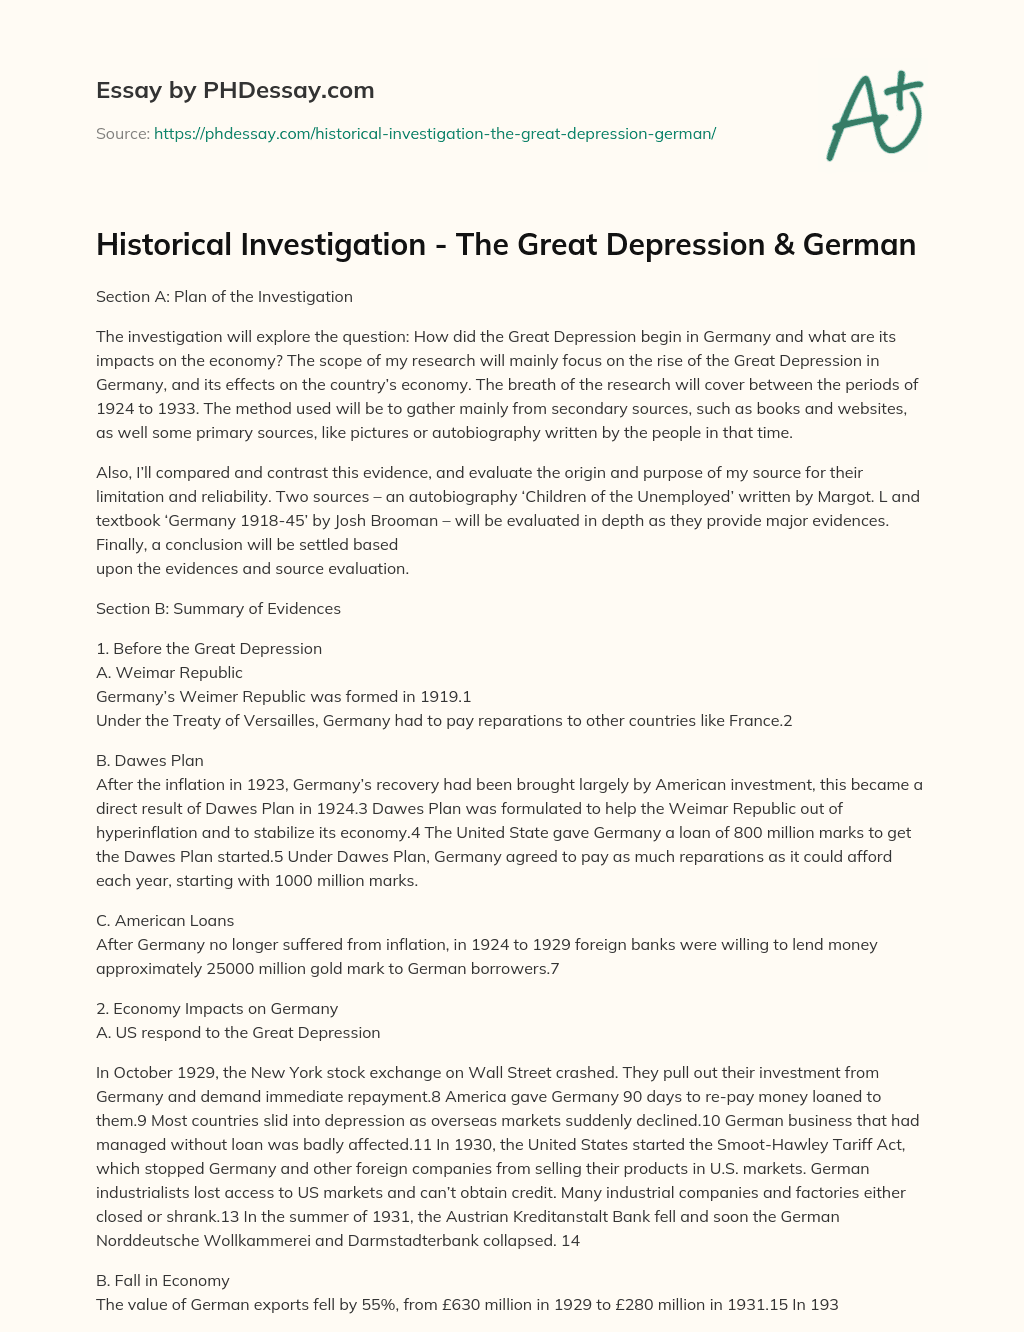 Historical Investigation – The Great Depression & German essay